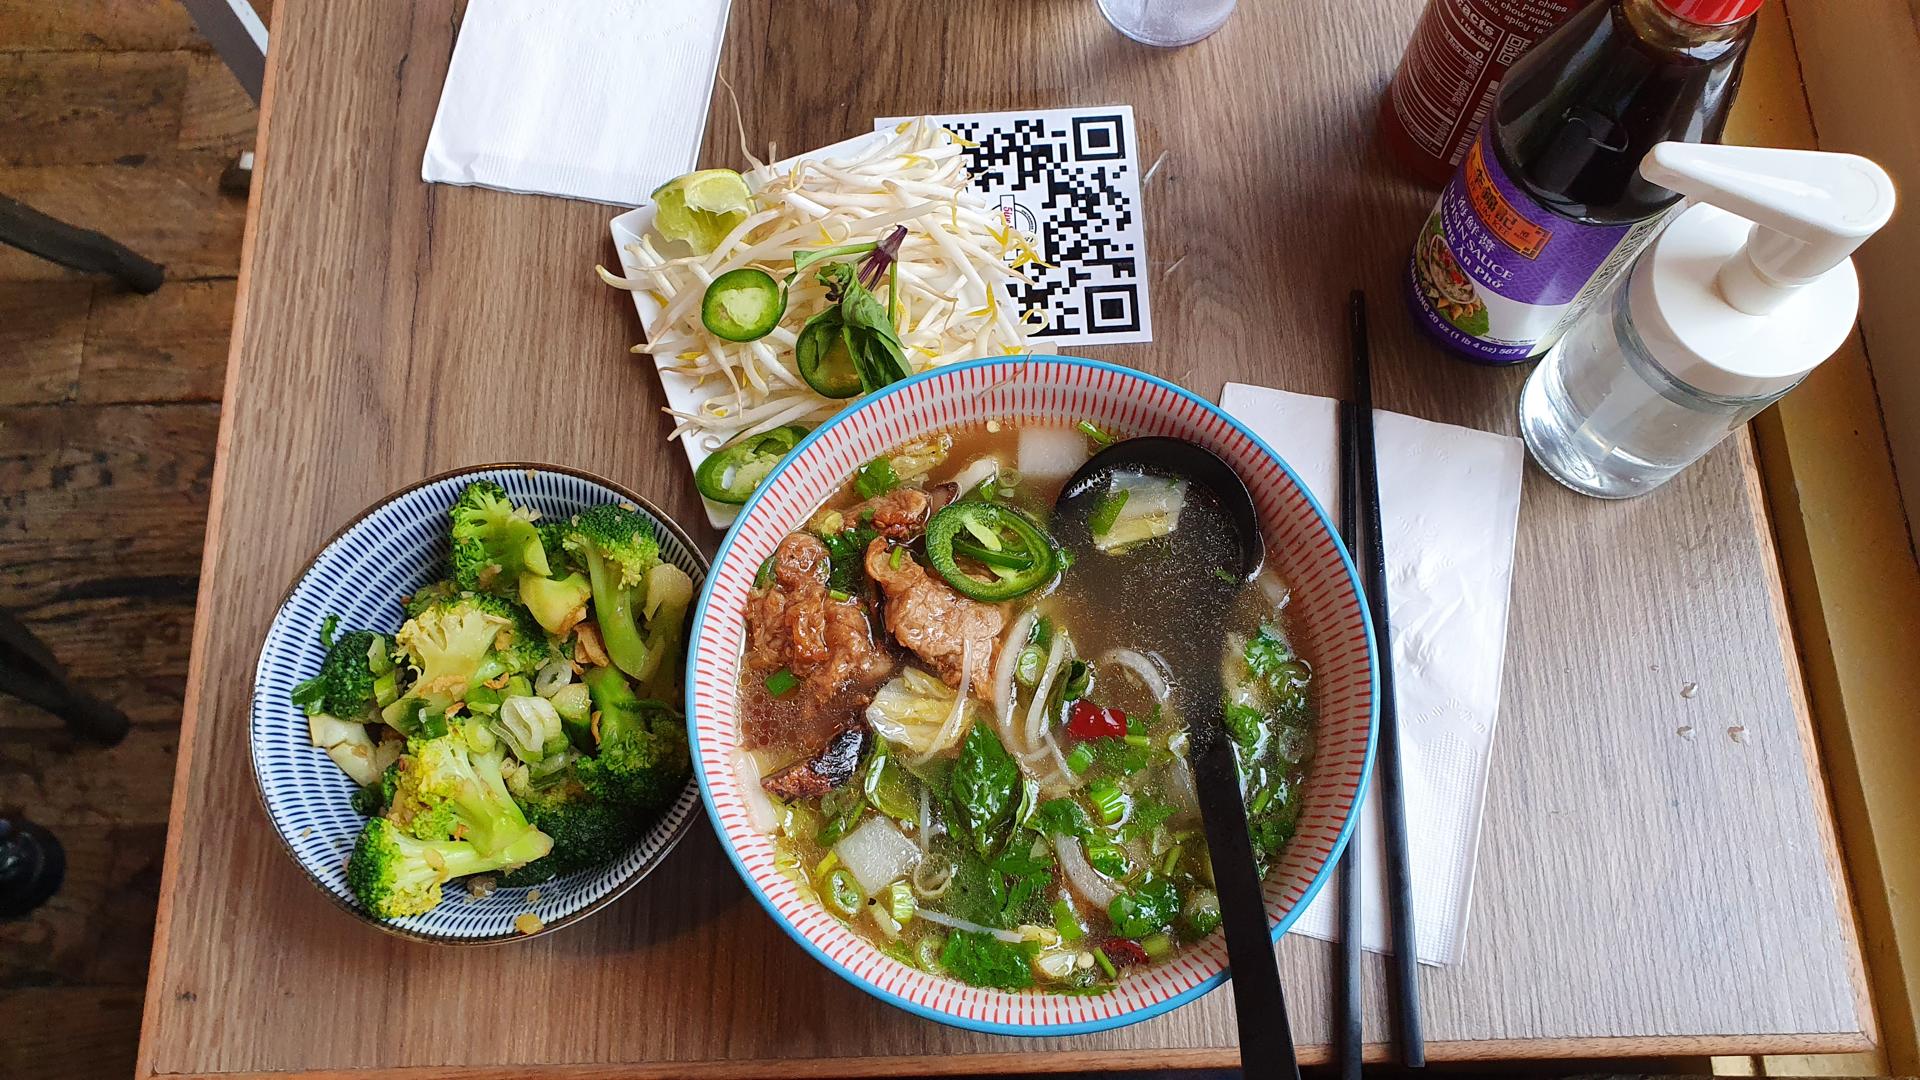 Vegan Vietnamese food at 5ive Spice in Park Slope, New York